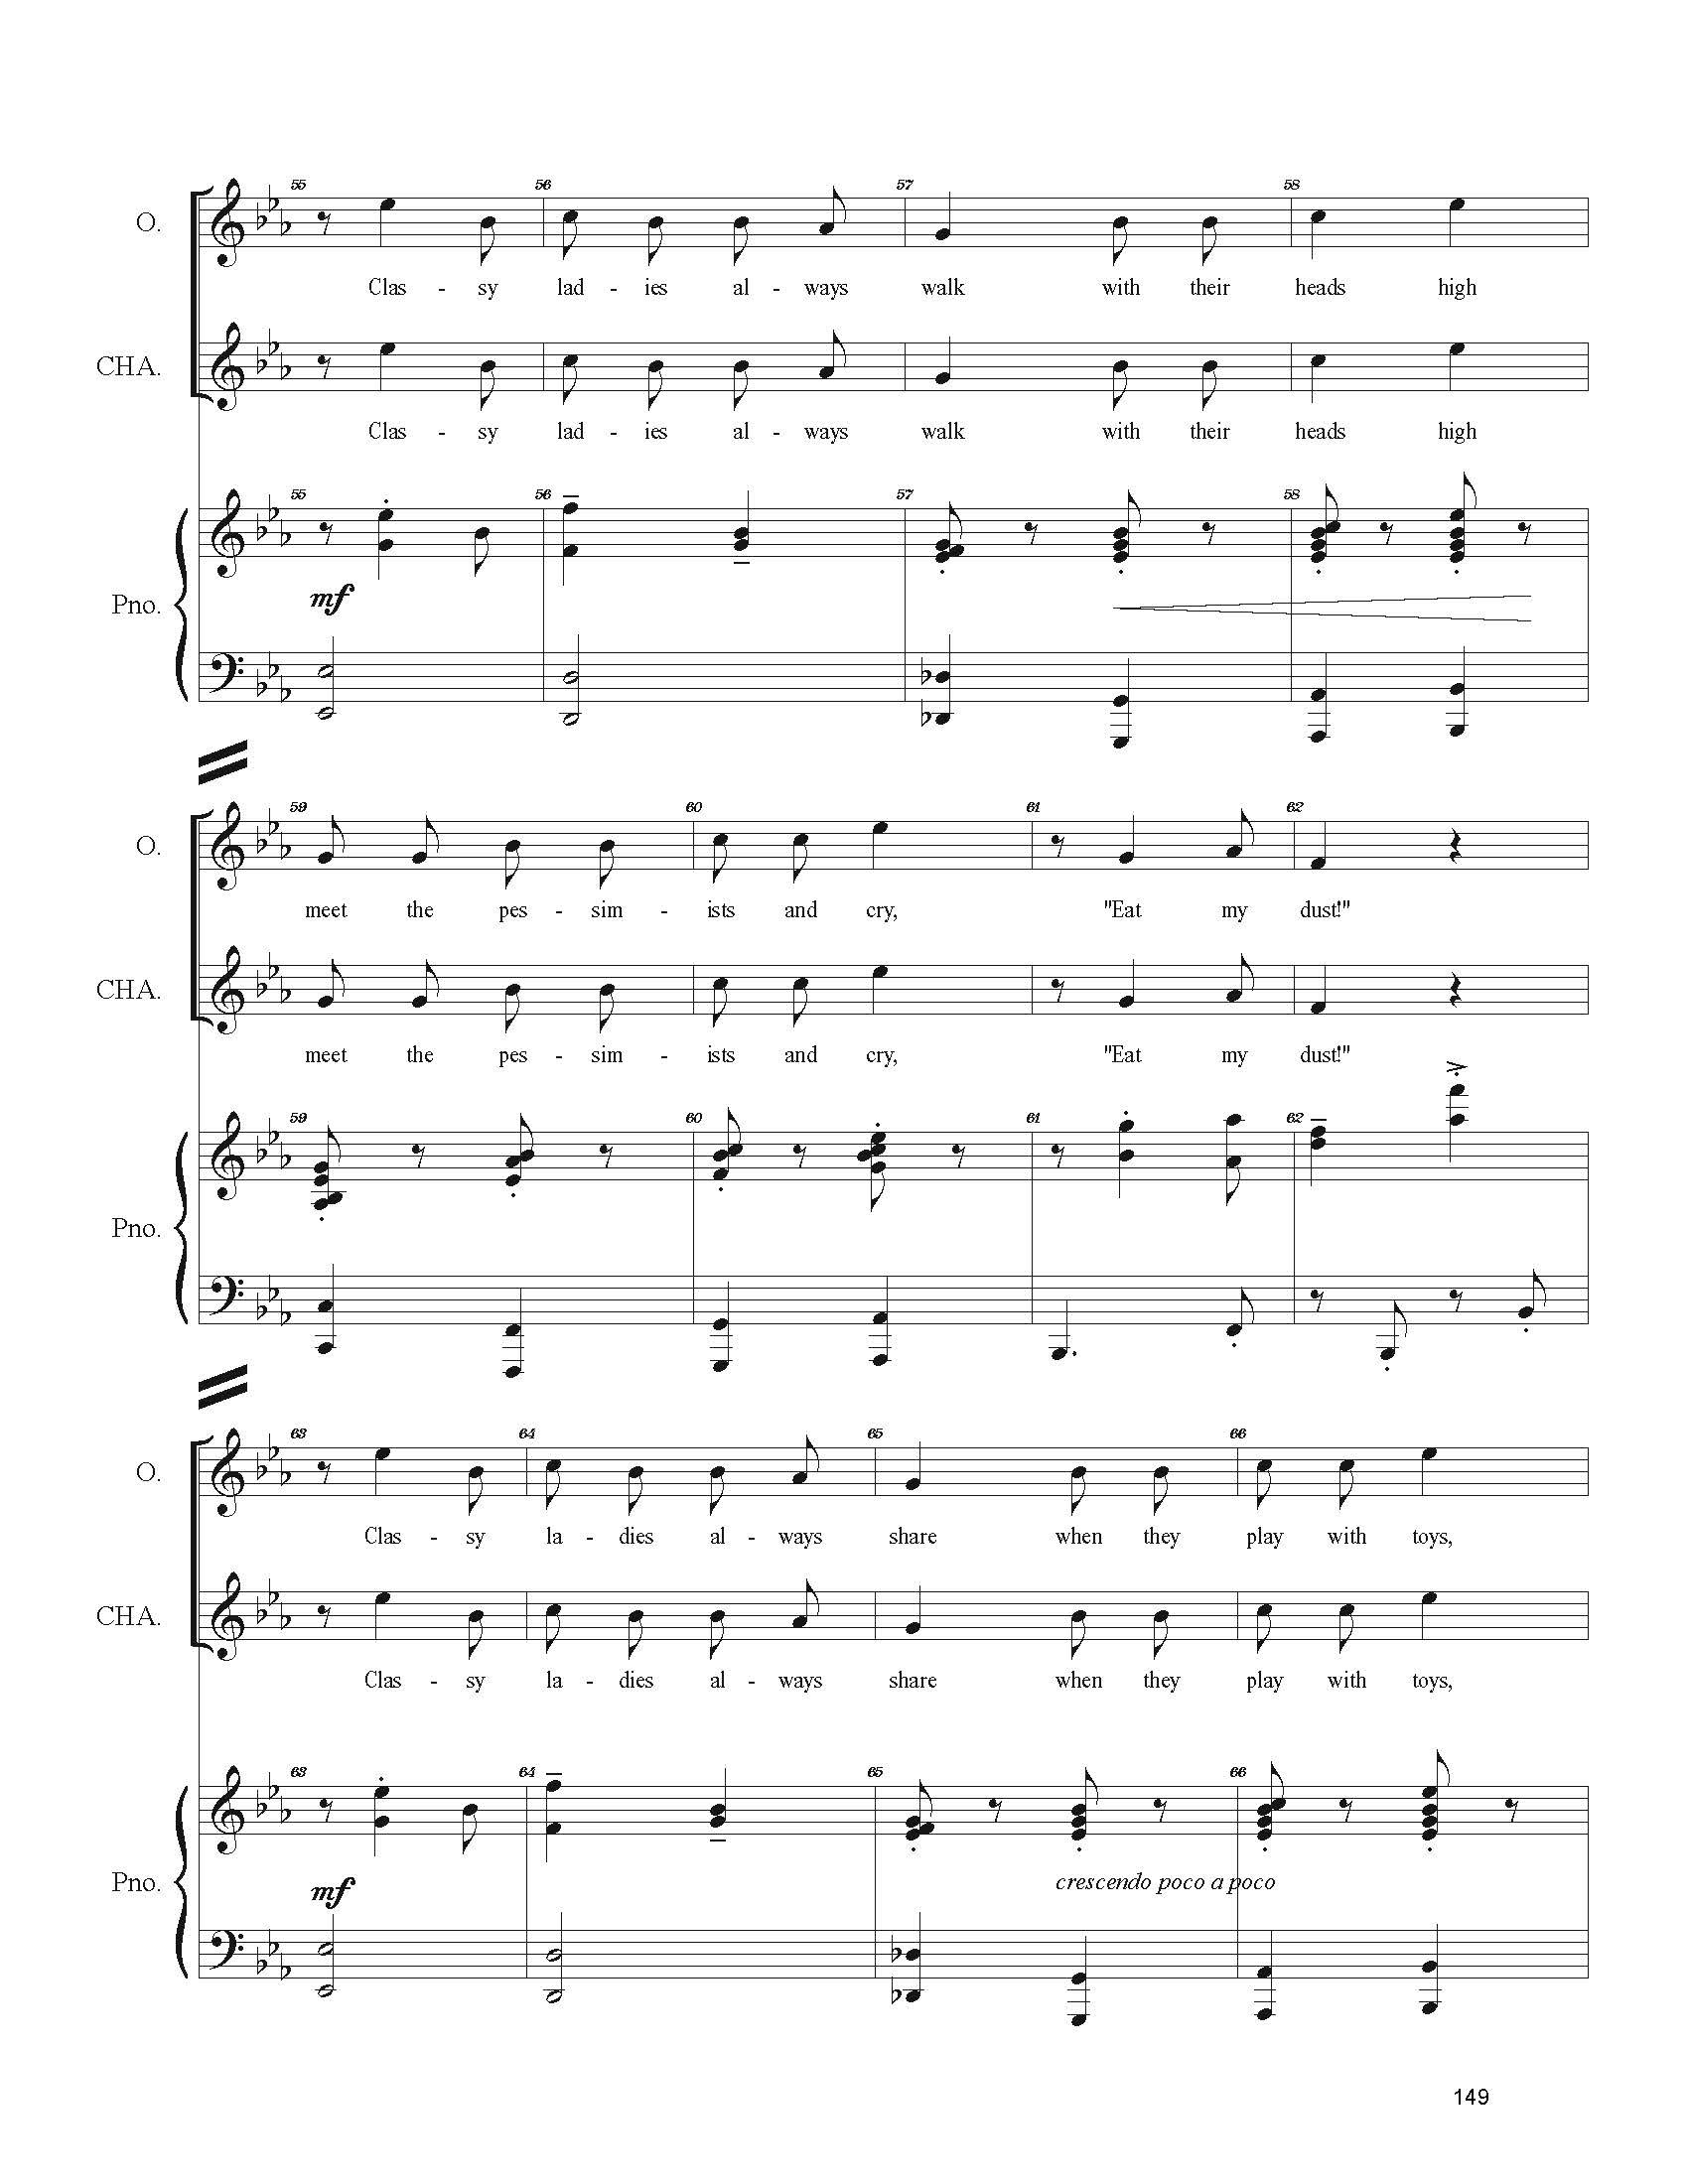 FULL PIANO VOCAL SCORE DRAFT 1 - Score_Page_149.jpg